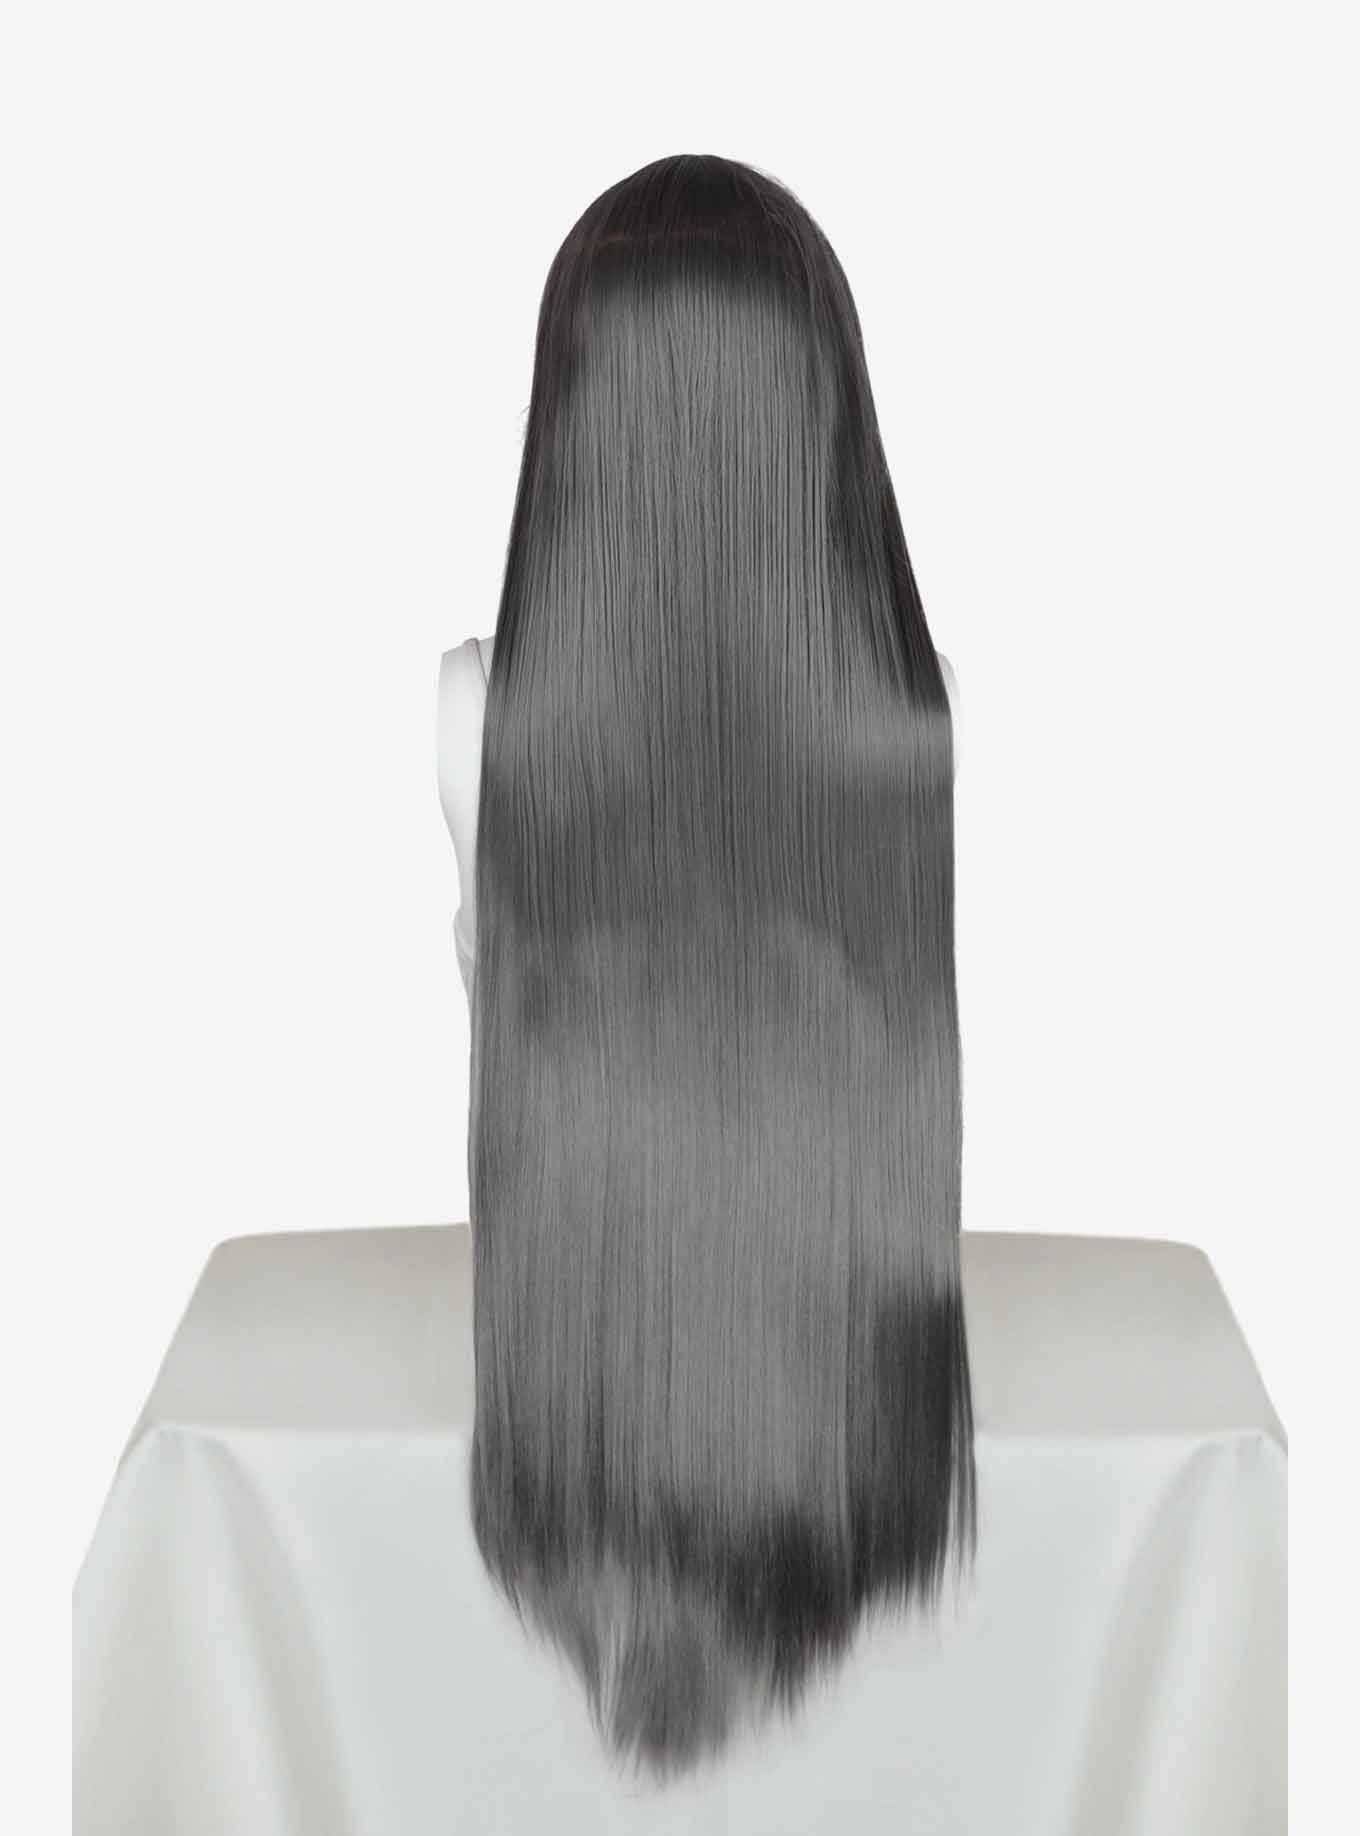 Epic Cosplay Persephone Gunmetal Grey Extra Long Straight Wig, , hi-res